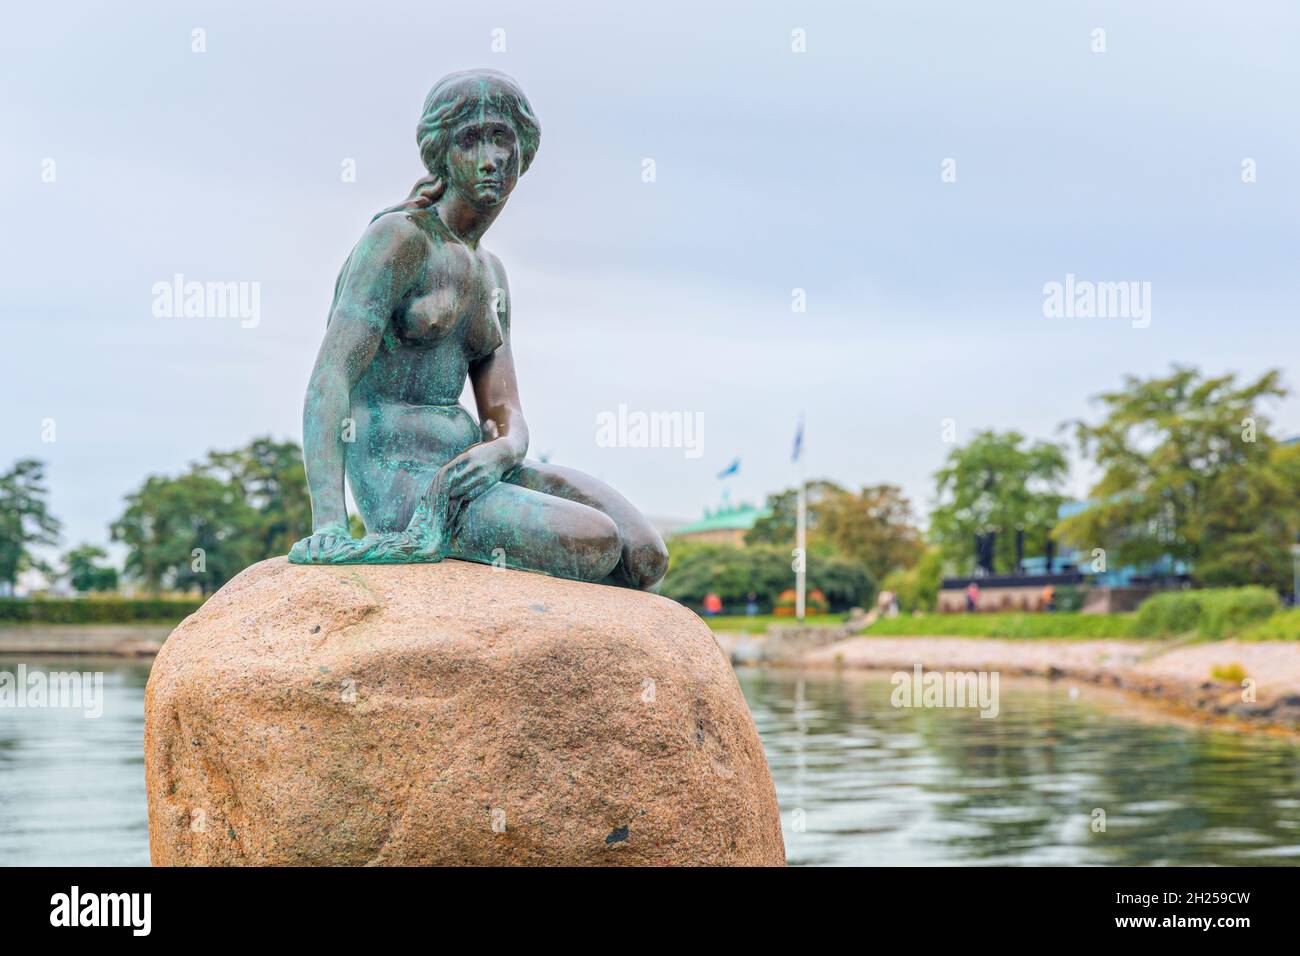 Copenhagen, Denmark, September 21, 2021: The Little Mermaid, statue by Edvard Eriksen on a rock in the water at the Langelinie promenade Stock Photo